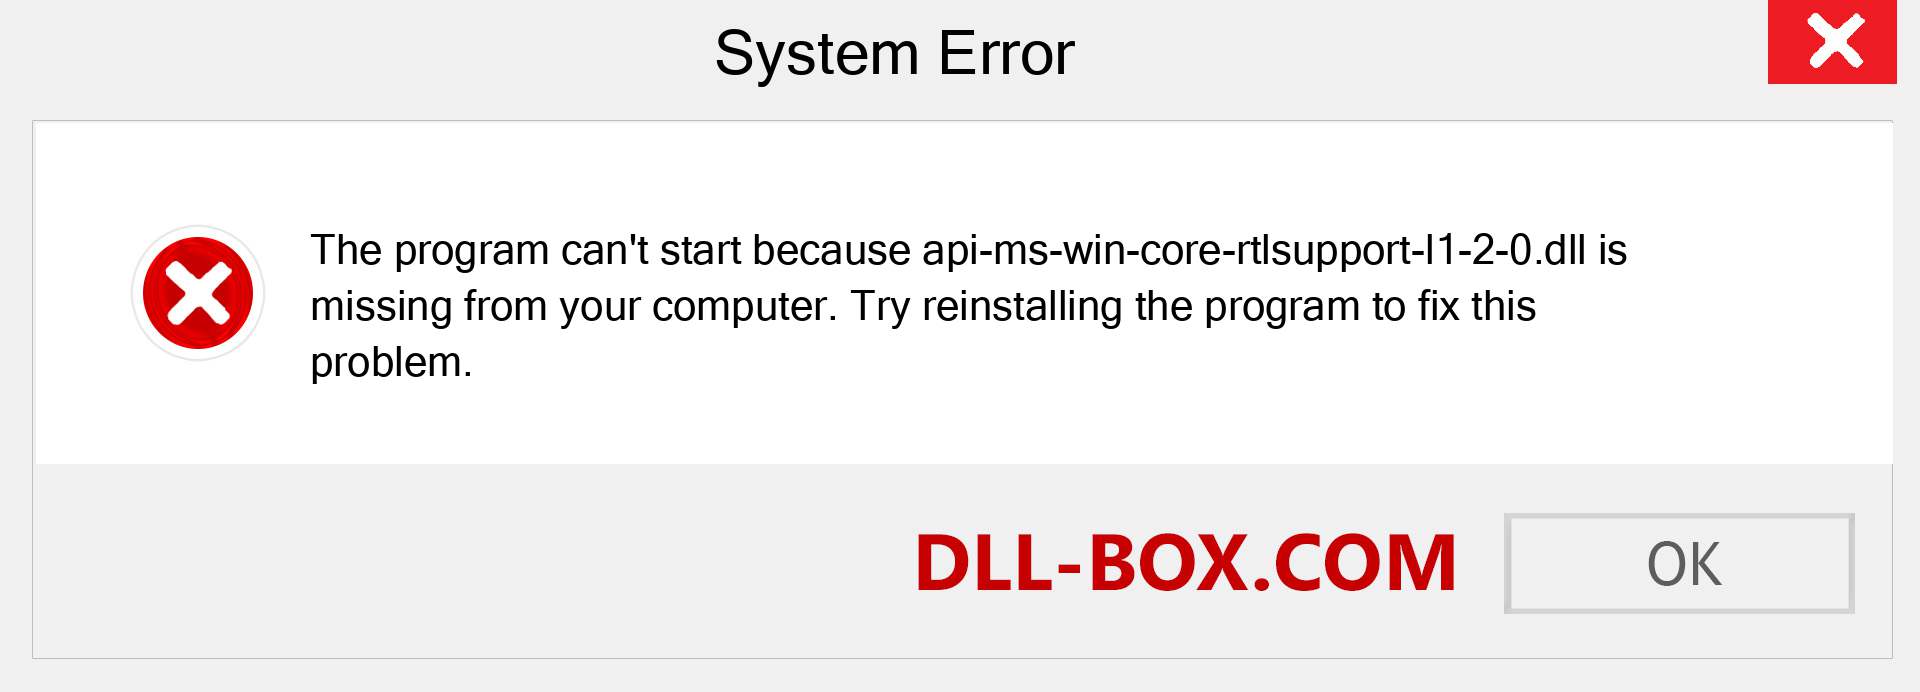  api-ms-win-core-rtlsupport-l1-2-0.dll file is missing?. Download for Windows 7, 8, 10 - Fix  api-ms-win-core-rtlsupport-l1-2-0 dll Missing Error on Windows, photos, images